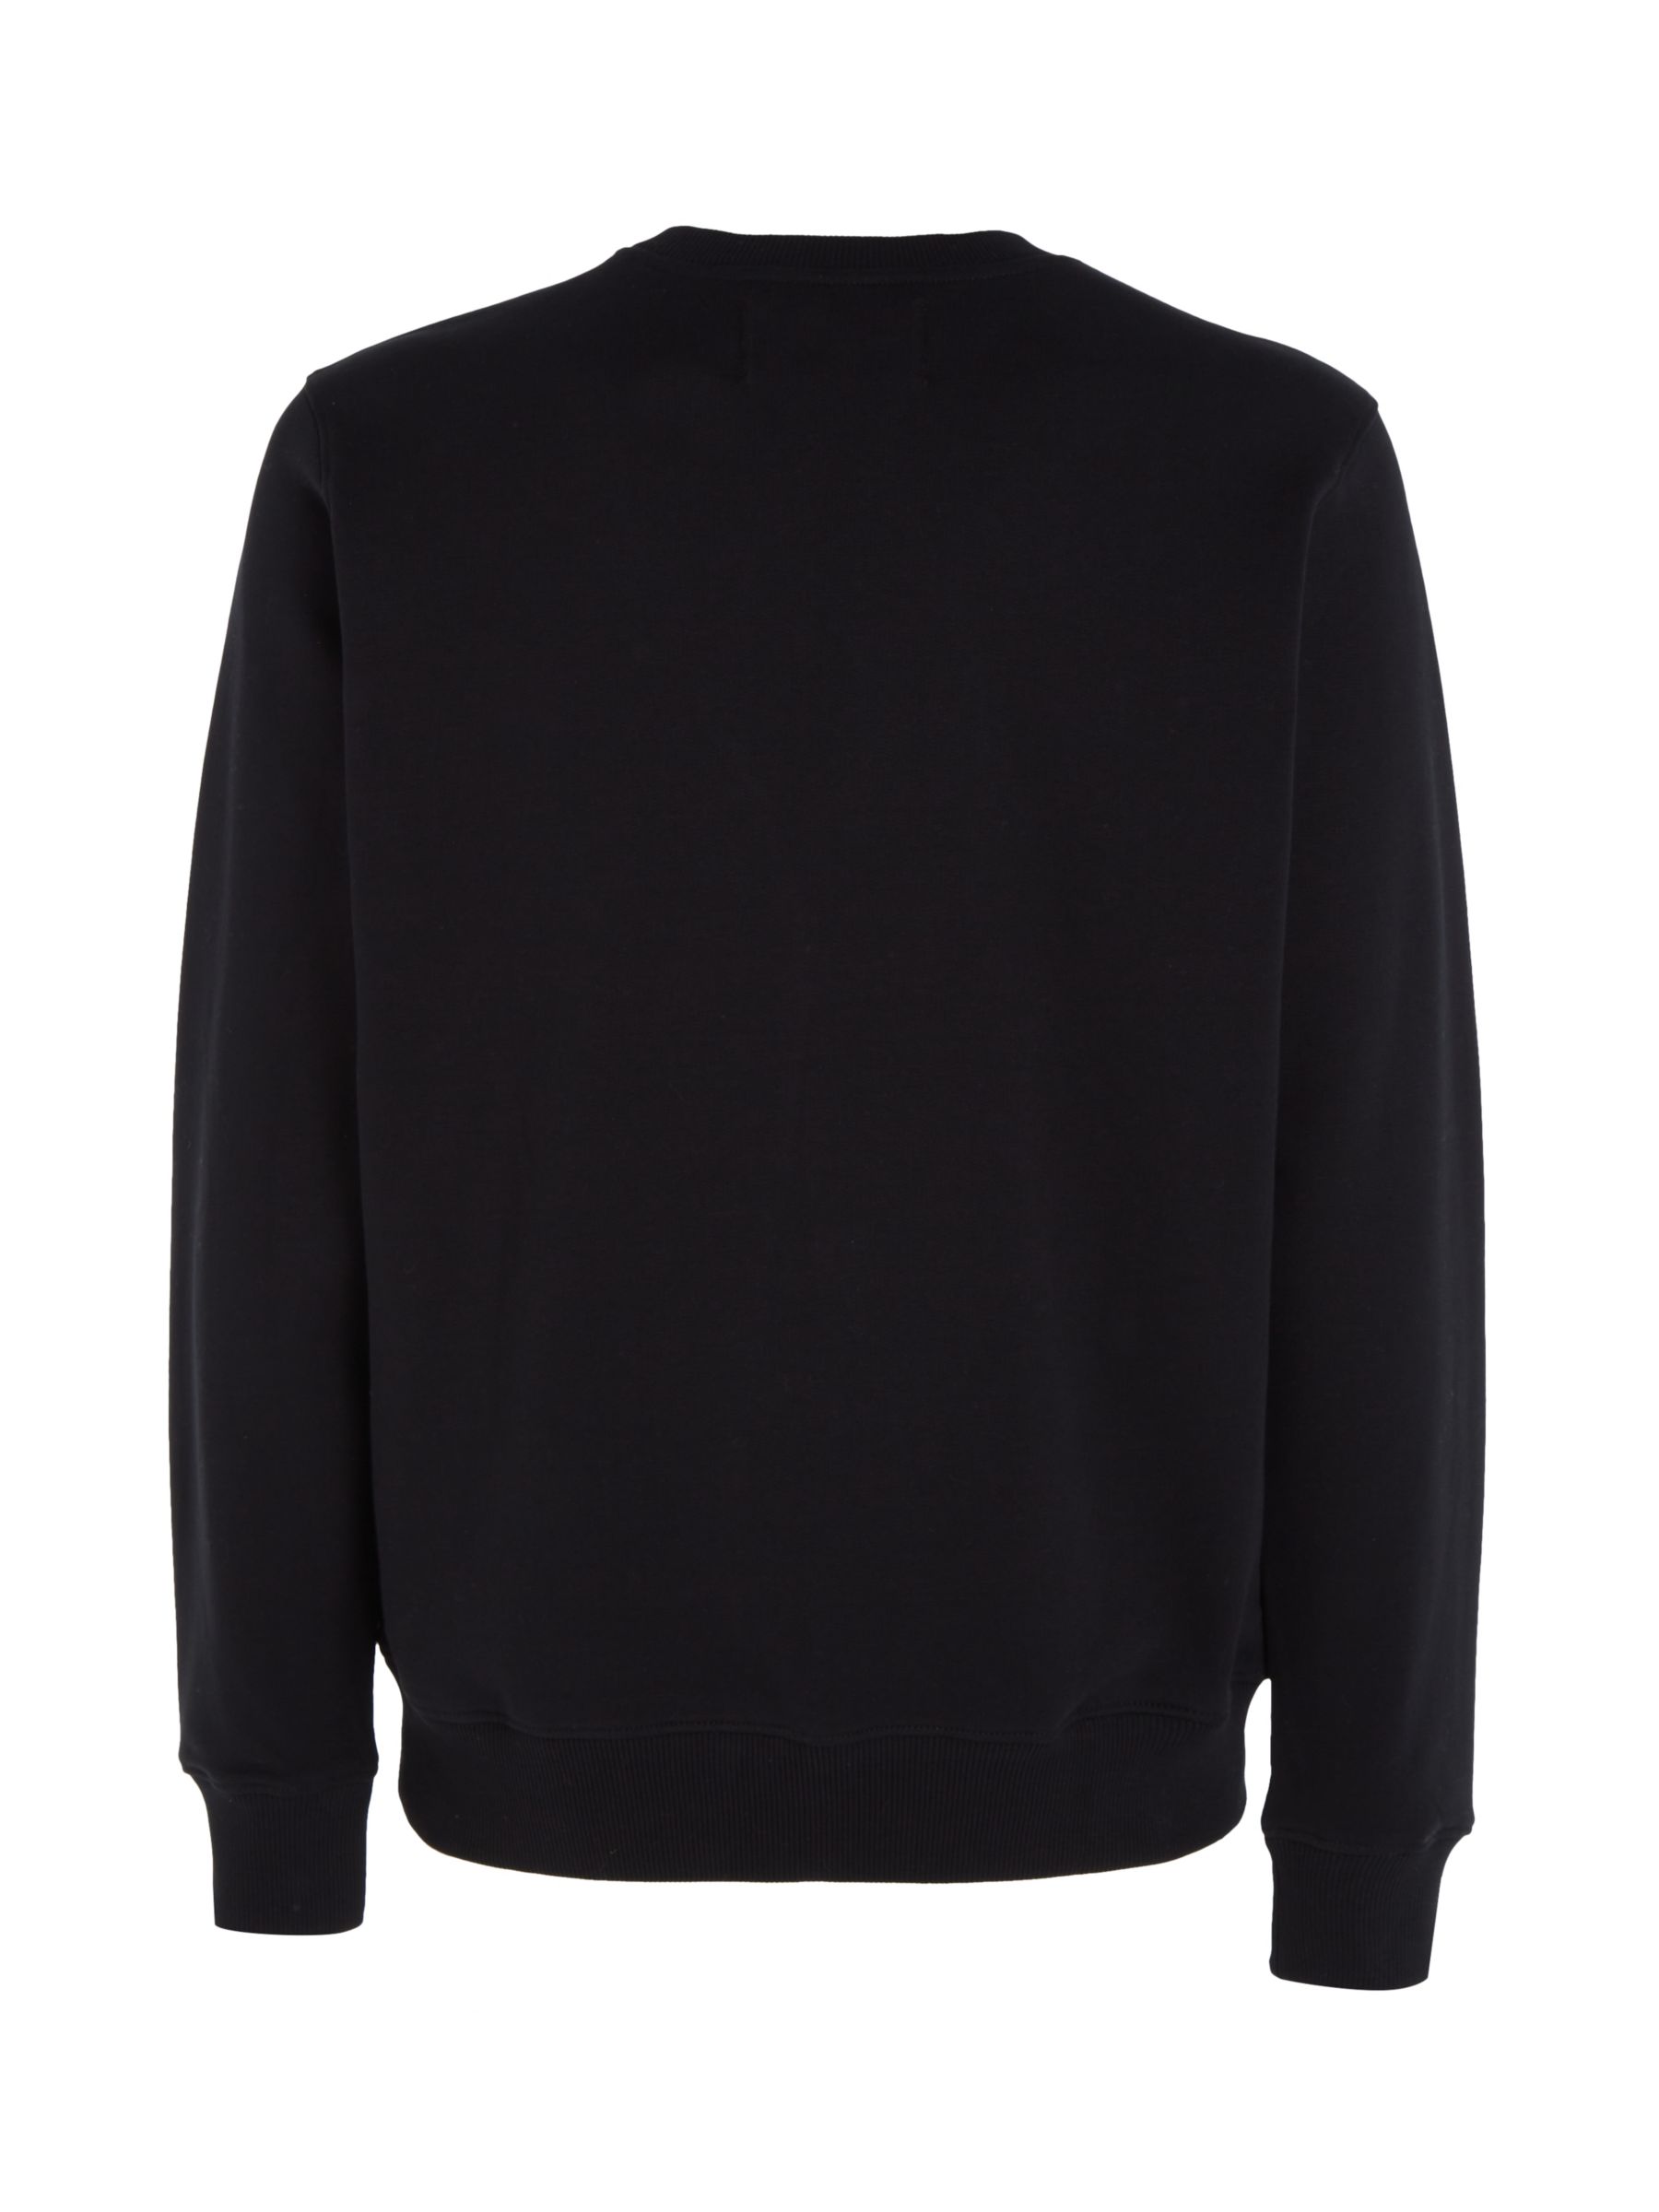 Calvin Klein Jeans Core Monogram Logo Cotton Sweatshirt, Ck Black at ...